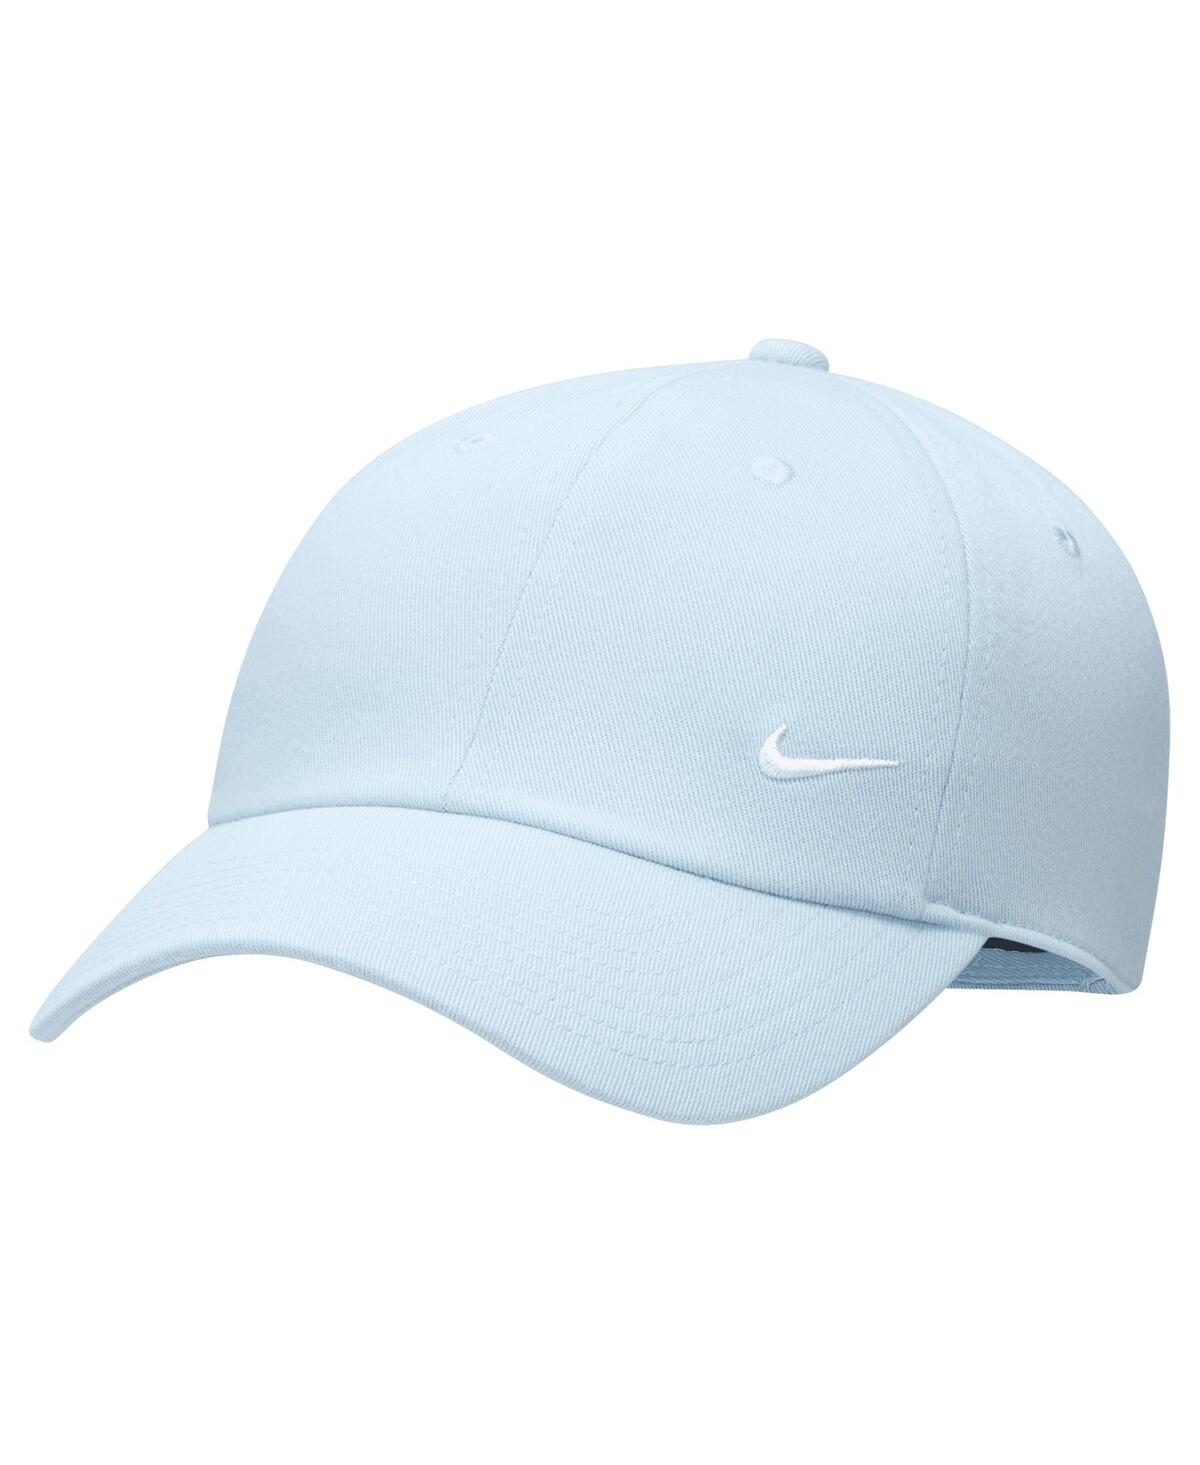 Men's and Women's Light Blue Swoosh Club Performance Adjustable Hat - Light Blue